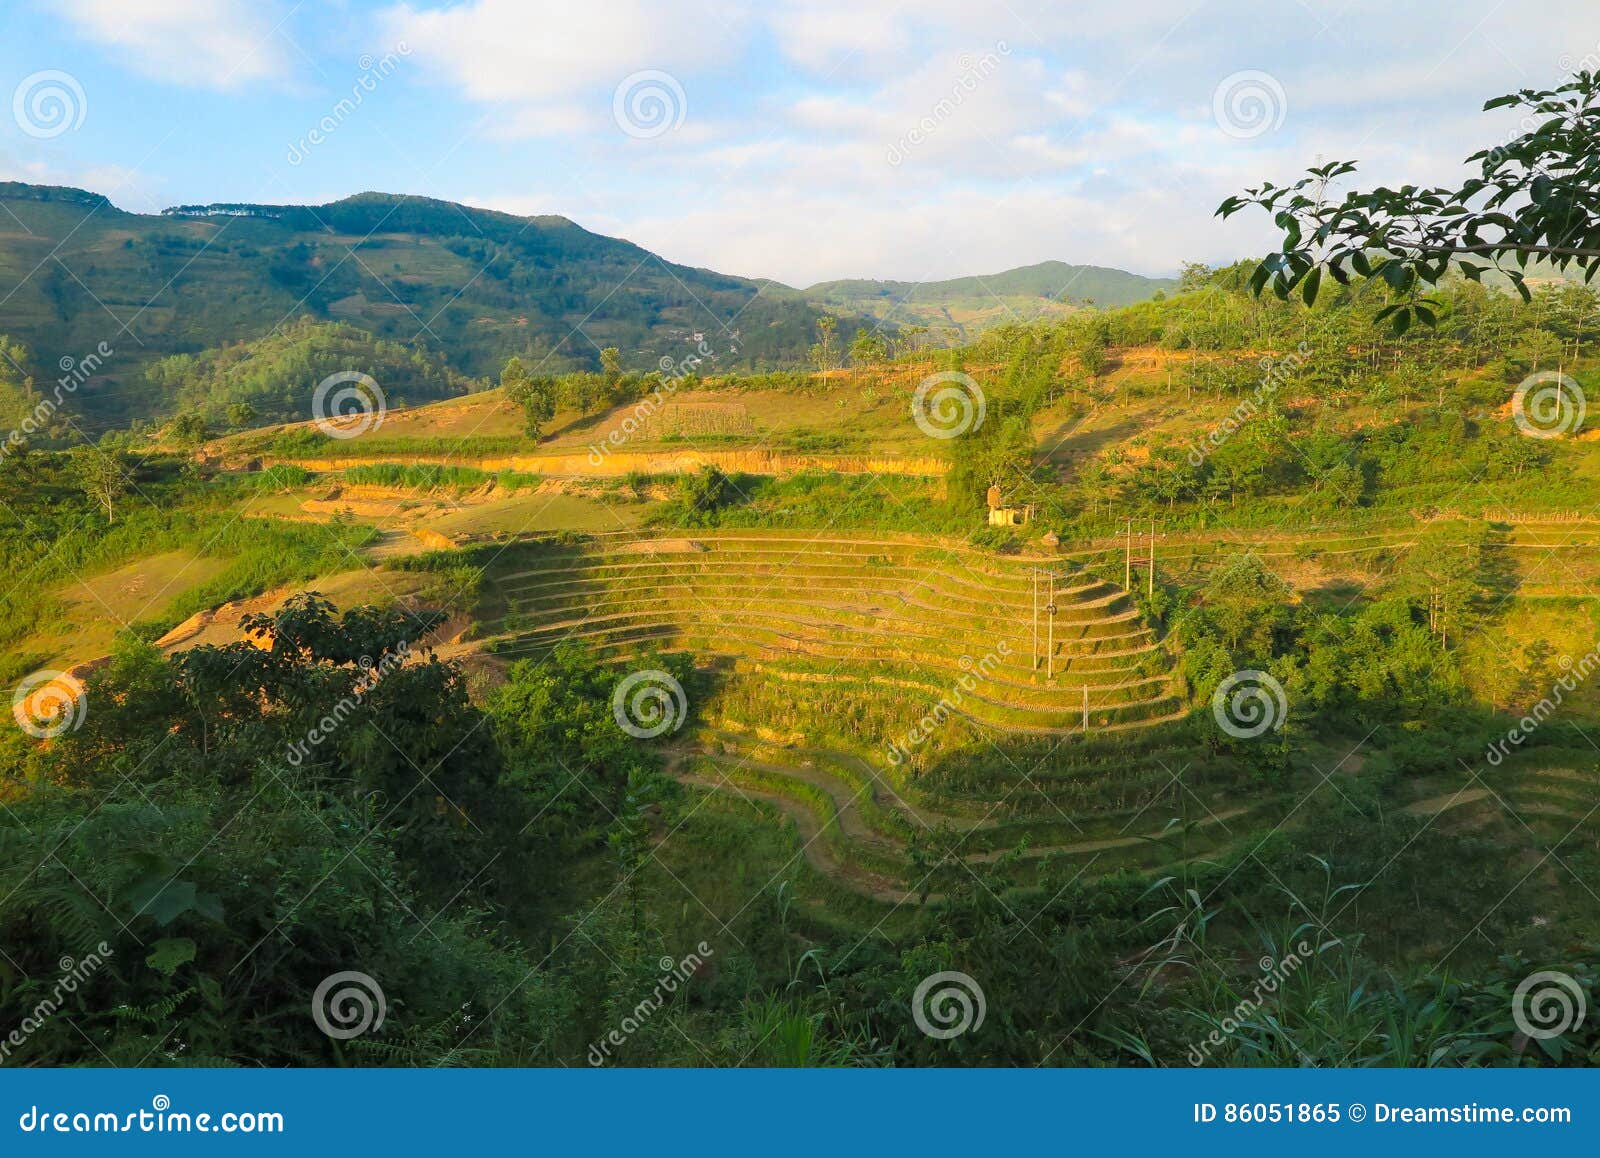 ricefields in vietnam, ha giang